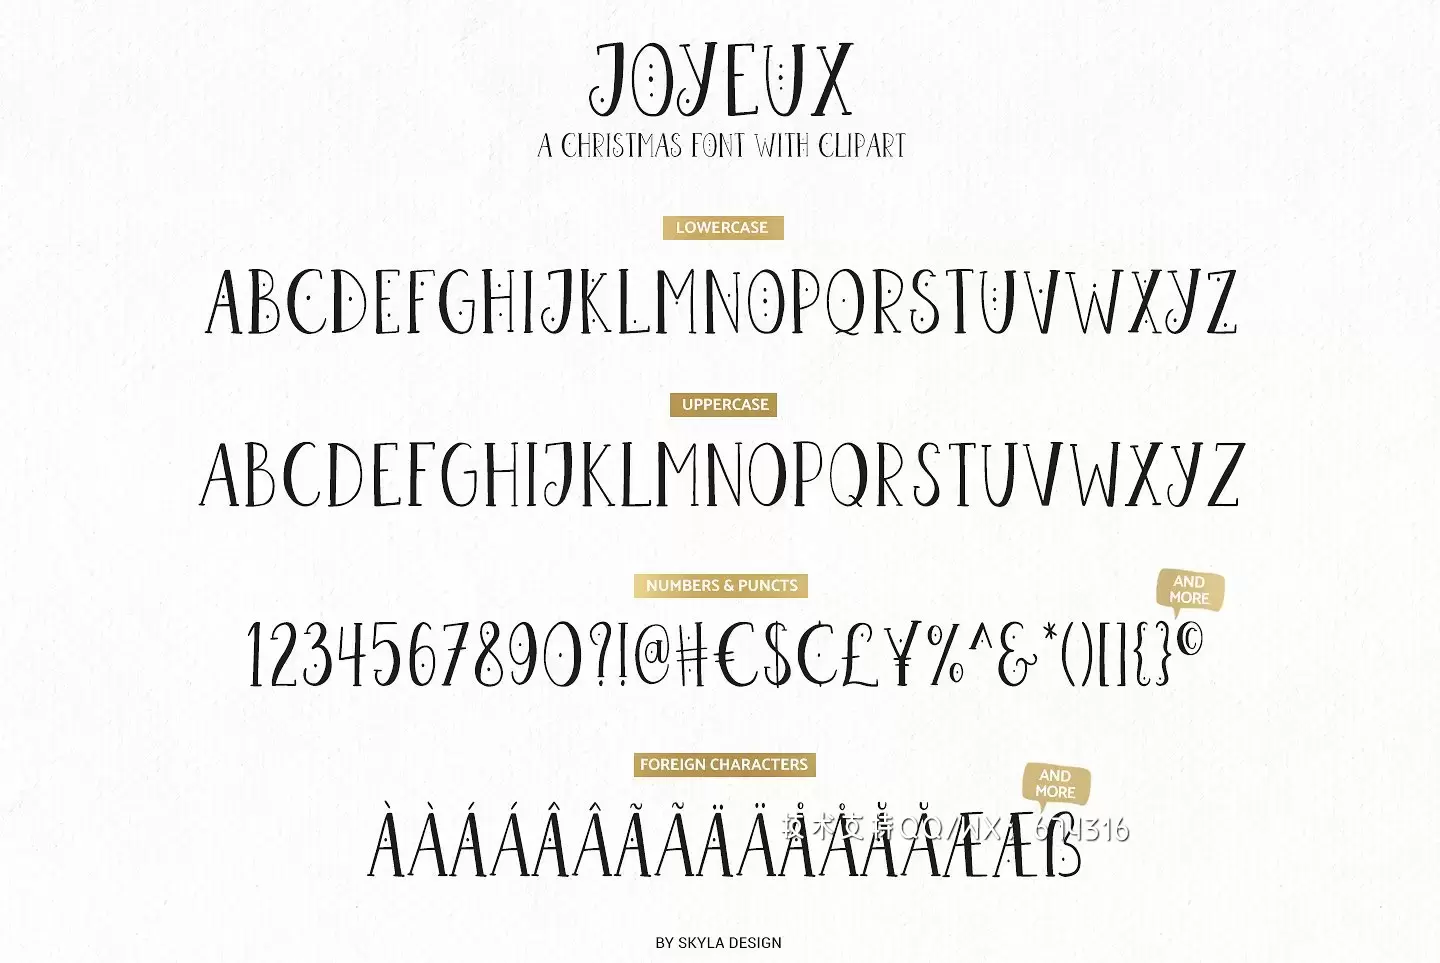 圣诞节元素字体 Joyeux Christmas font & clipart插图7